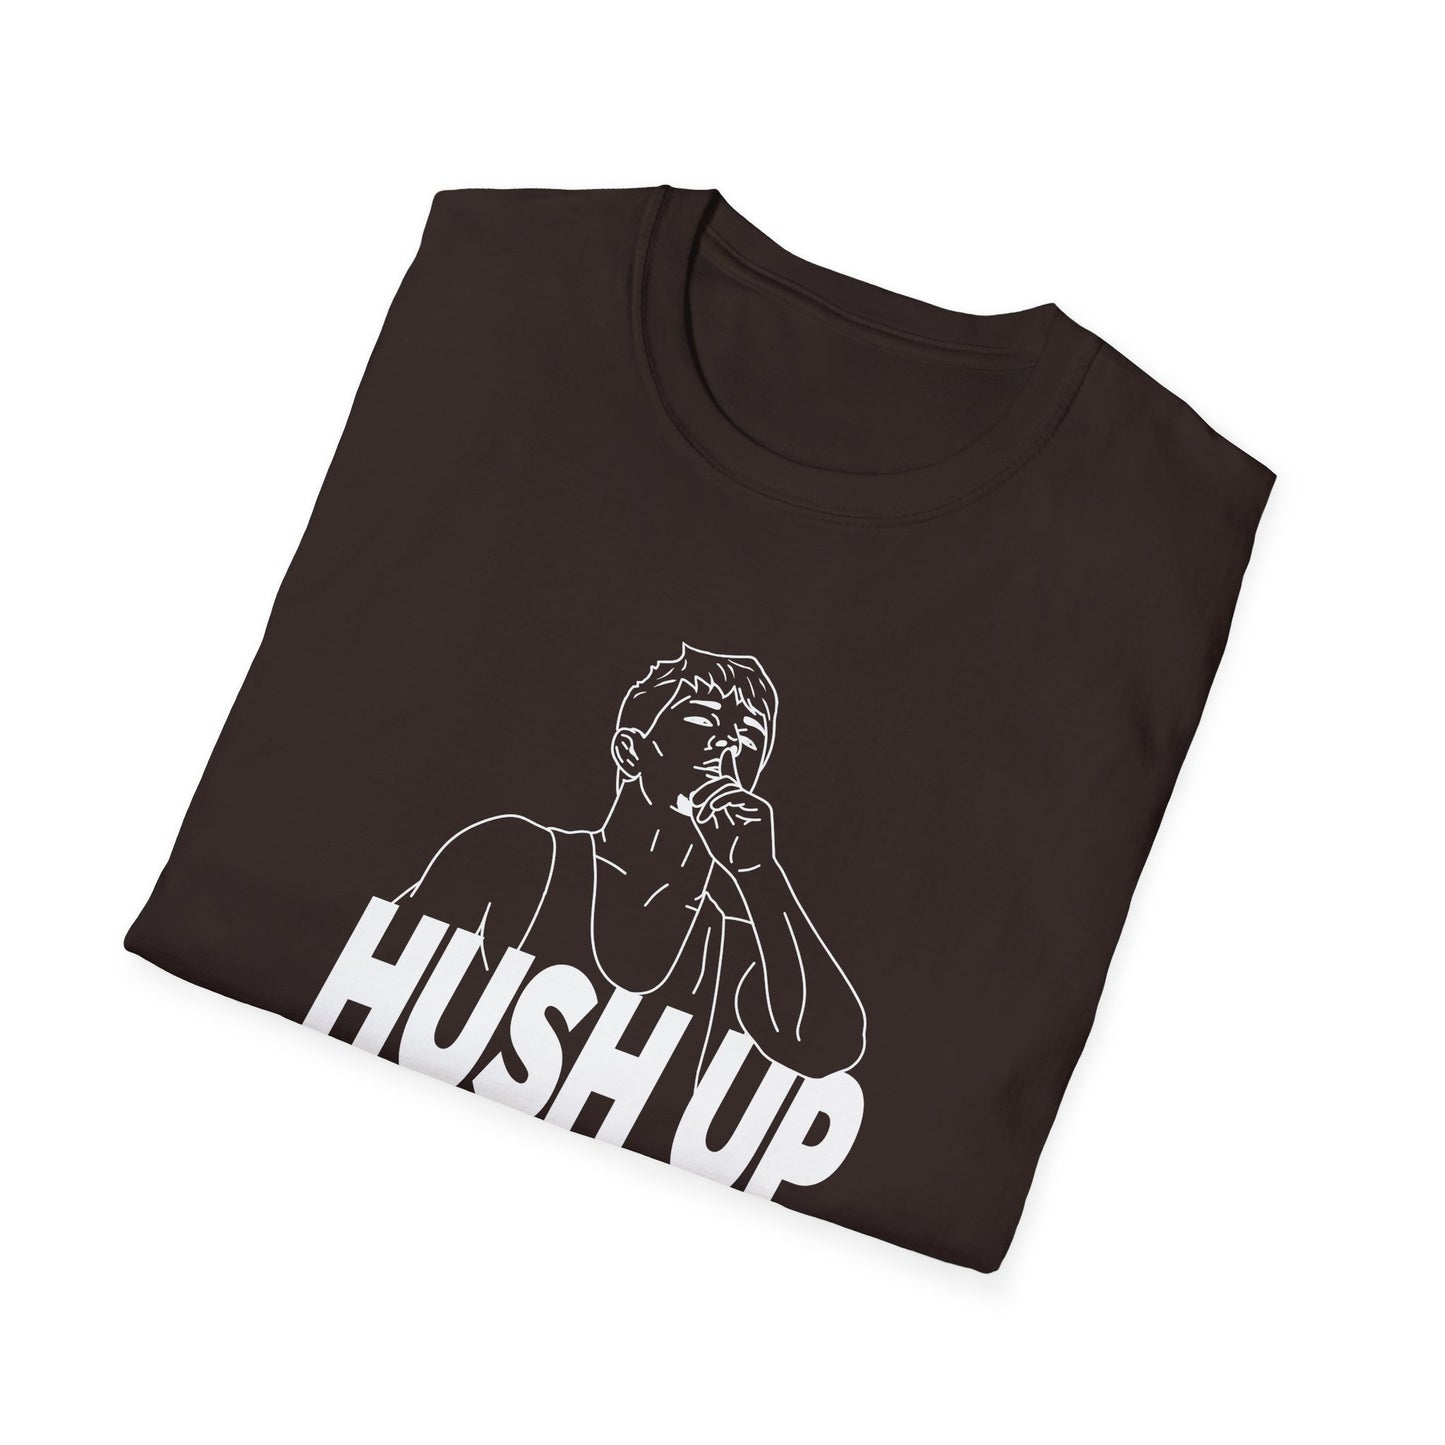 Jore Volk "Hush Up" Shirt